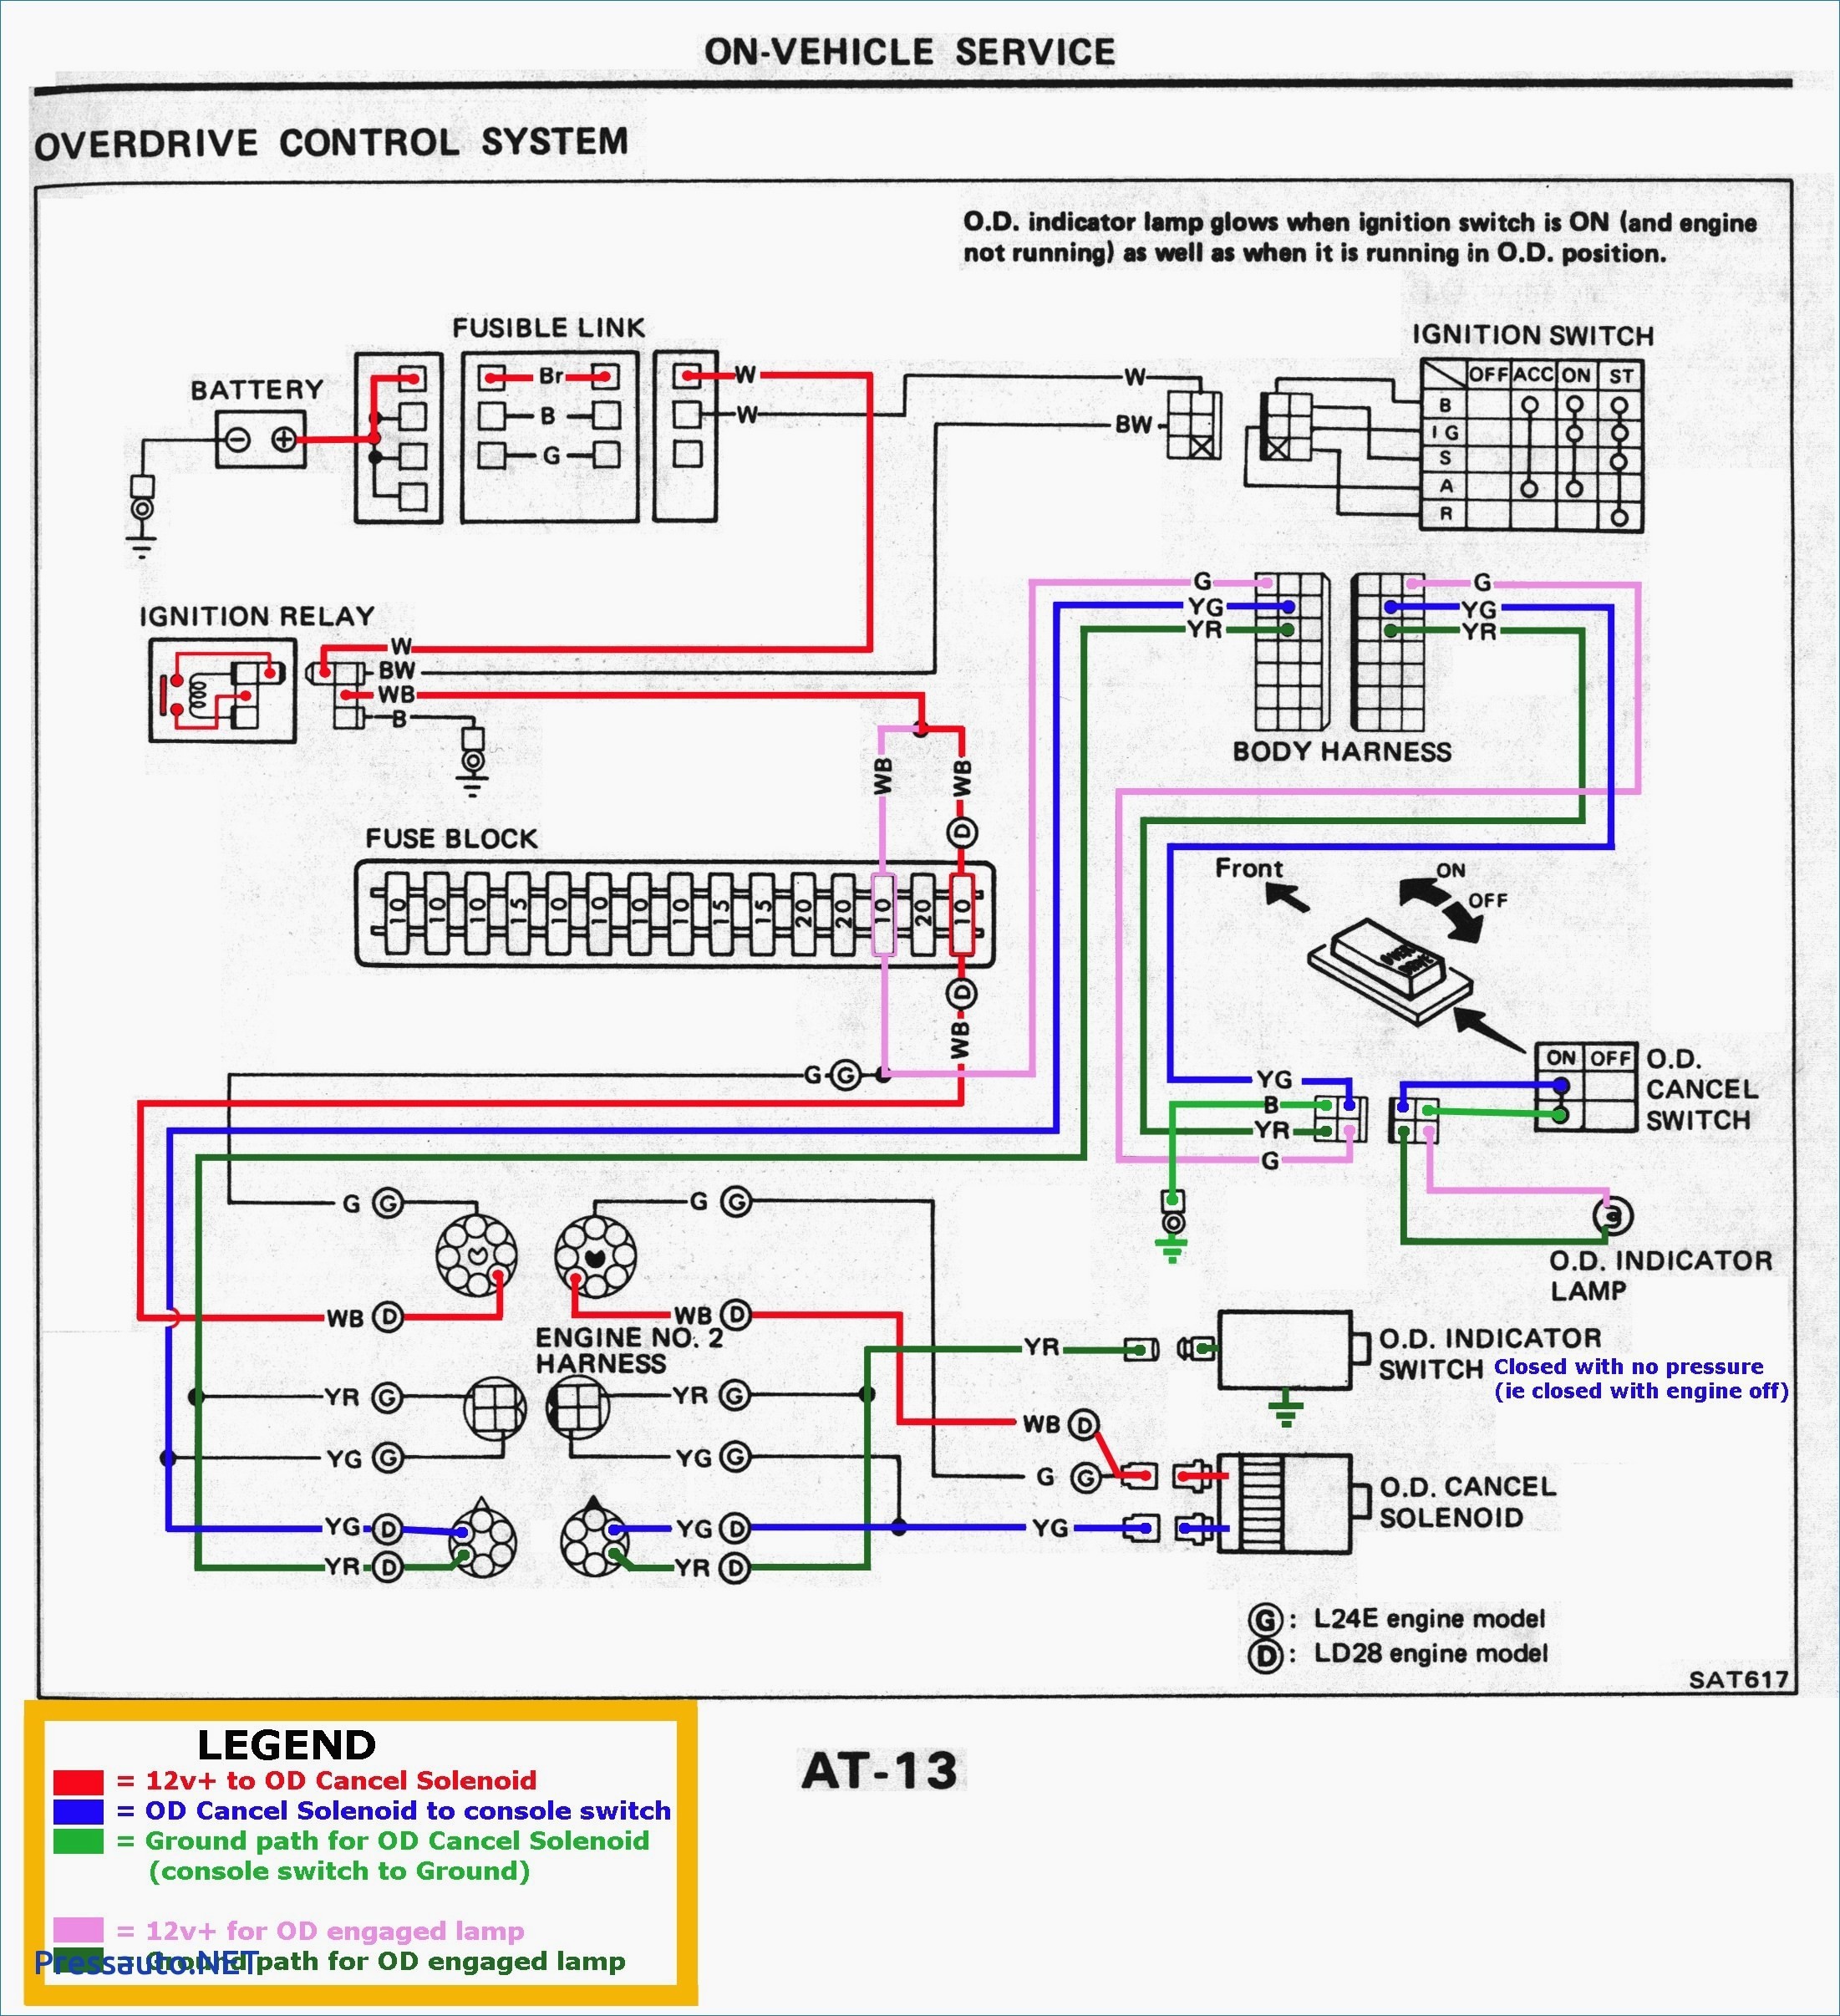 John Deere Ignition Switch Wiring Diagram Elegant Electrical Wiring Nissan Wiring Diagram Get Image About